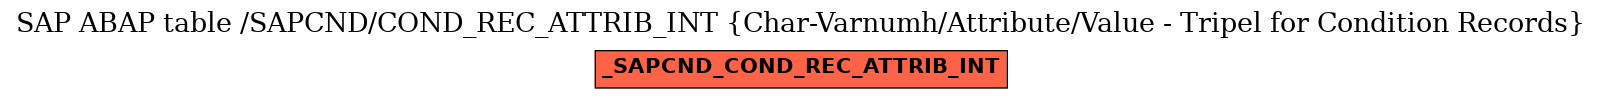 E-R Diagram for table /SAPCND/COND_REC_ATTRIB_INT (Char-Varnumh/Attribute/Value - Tripel for Condition Records)